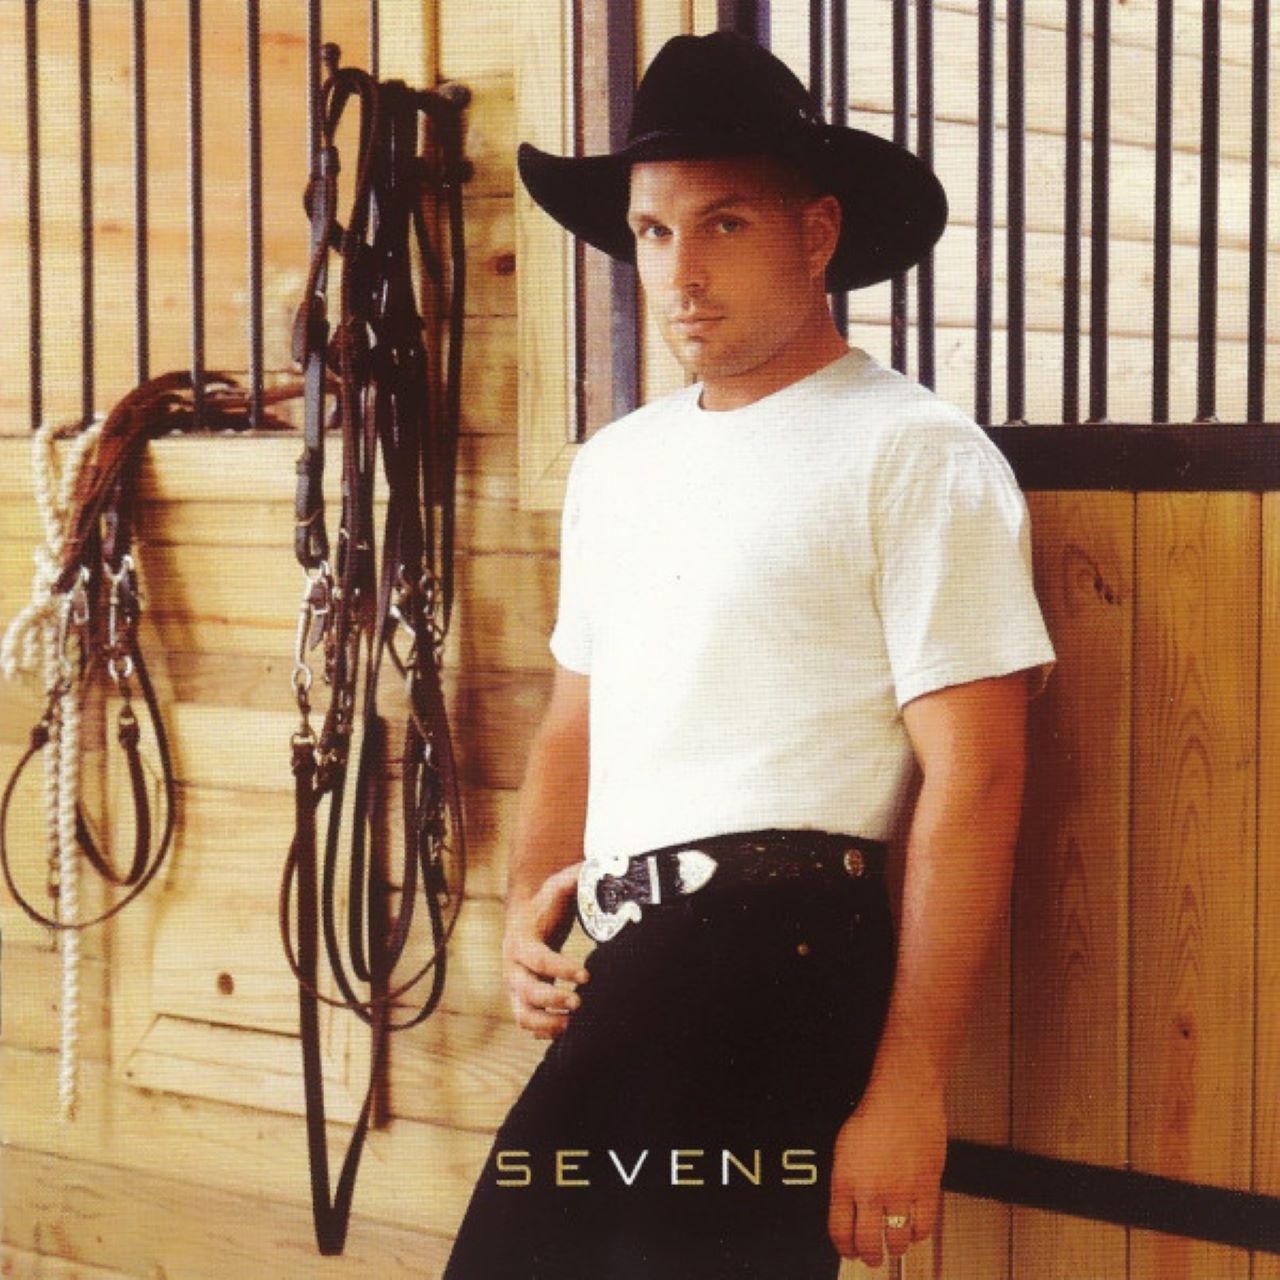 Garth Brooks - Sevens cover album